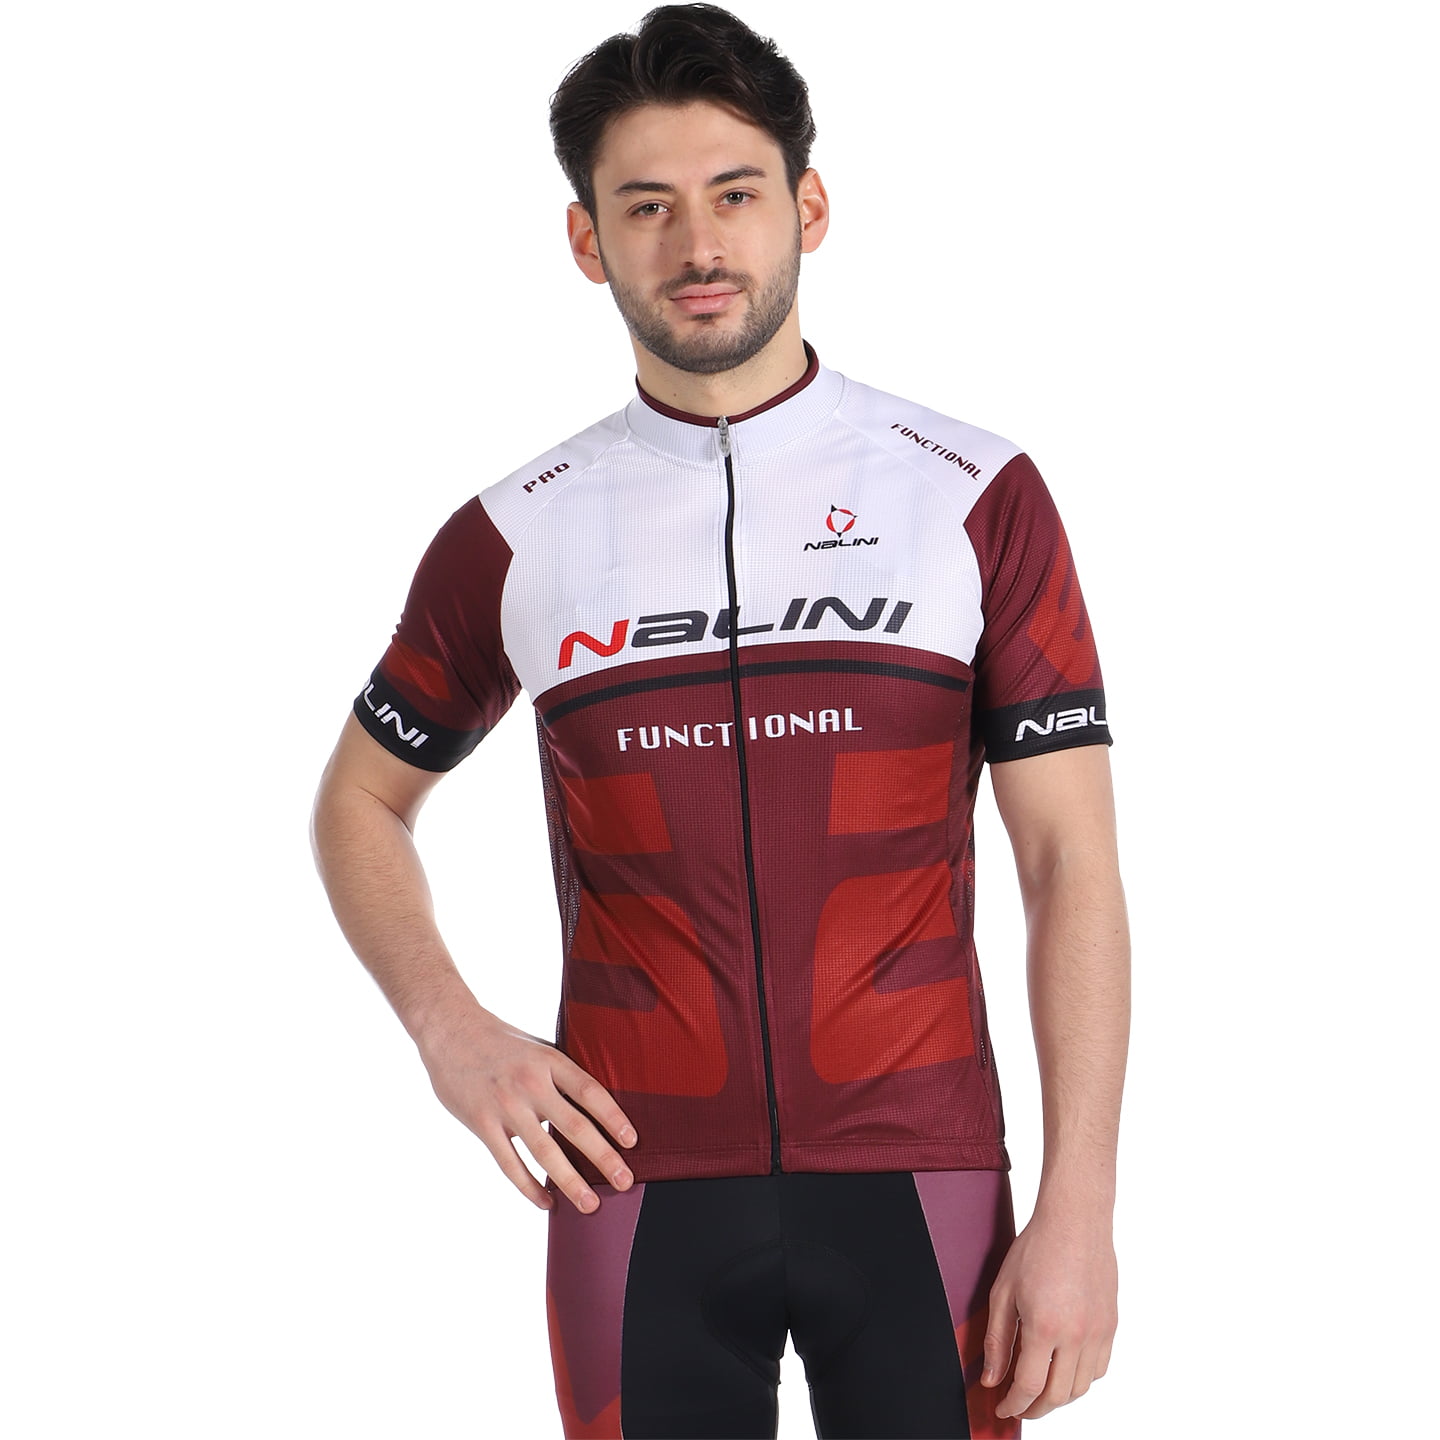 NALINI Bao Short Sleeve Jersey Short Sleeve Jersey, for men, size M, Cycling jersey, Cycling clothing